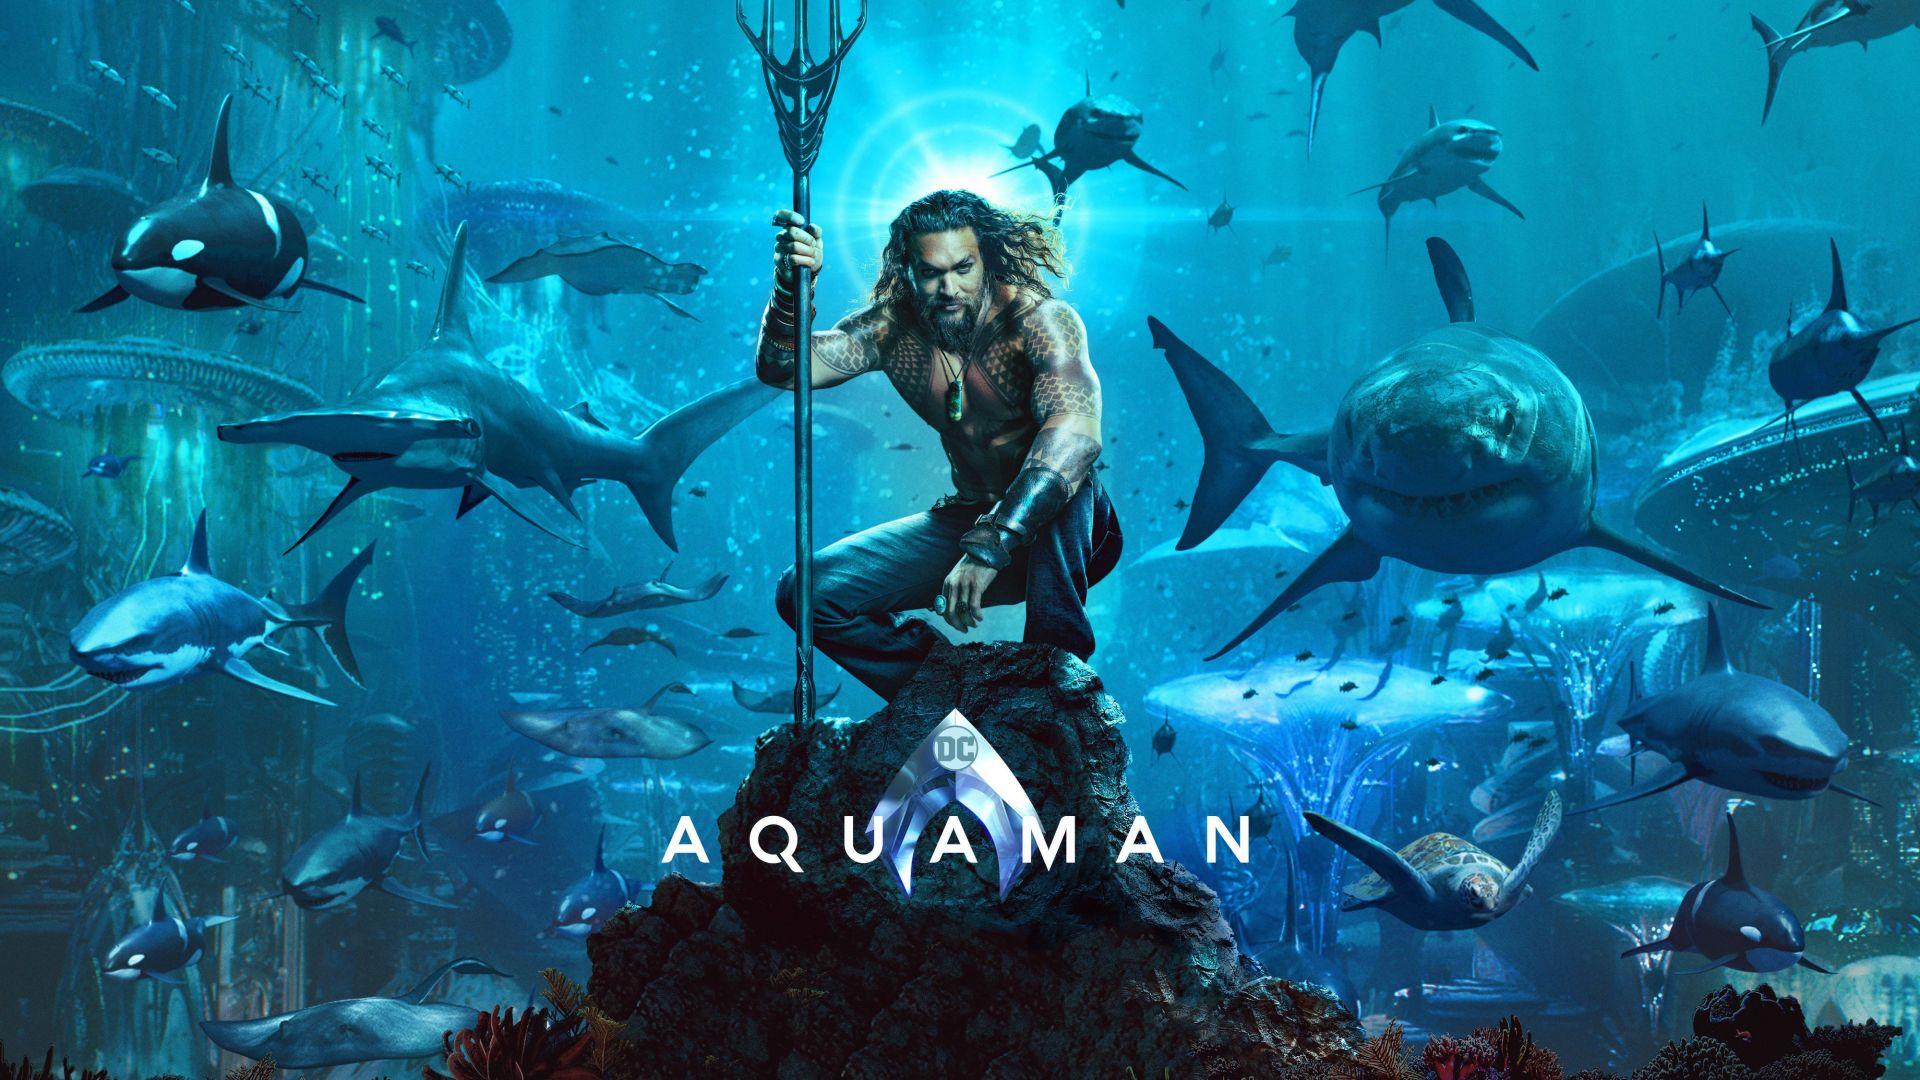 Aquaman Movie Photo Wallpaper for Desktop and Mobile